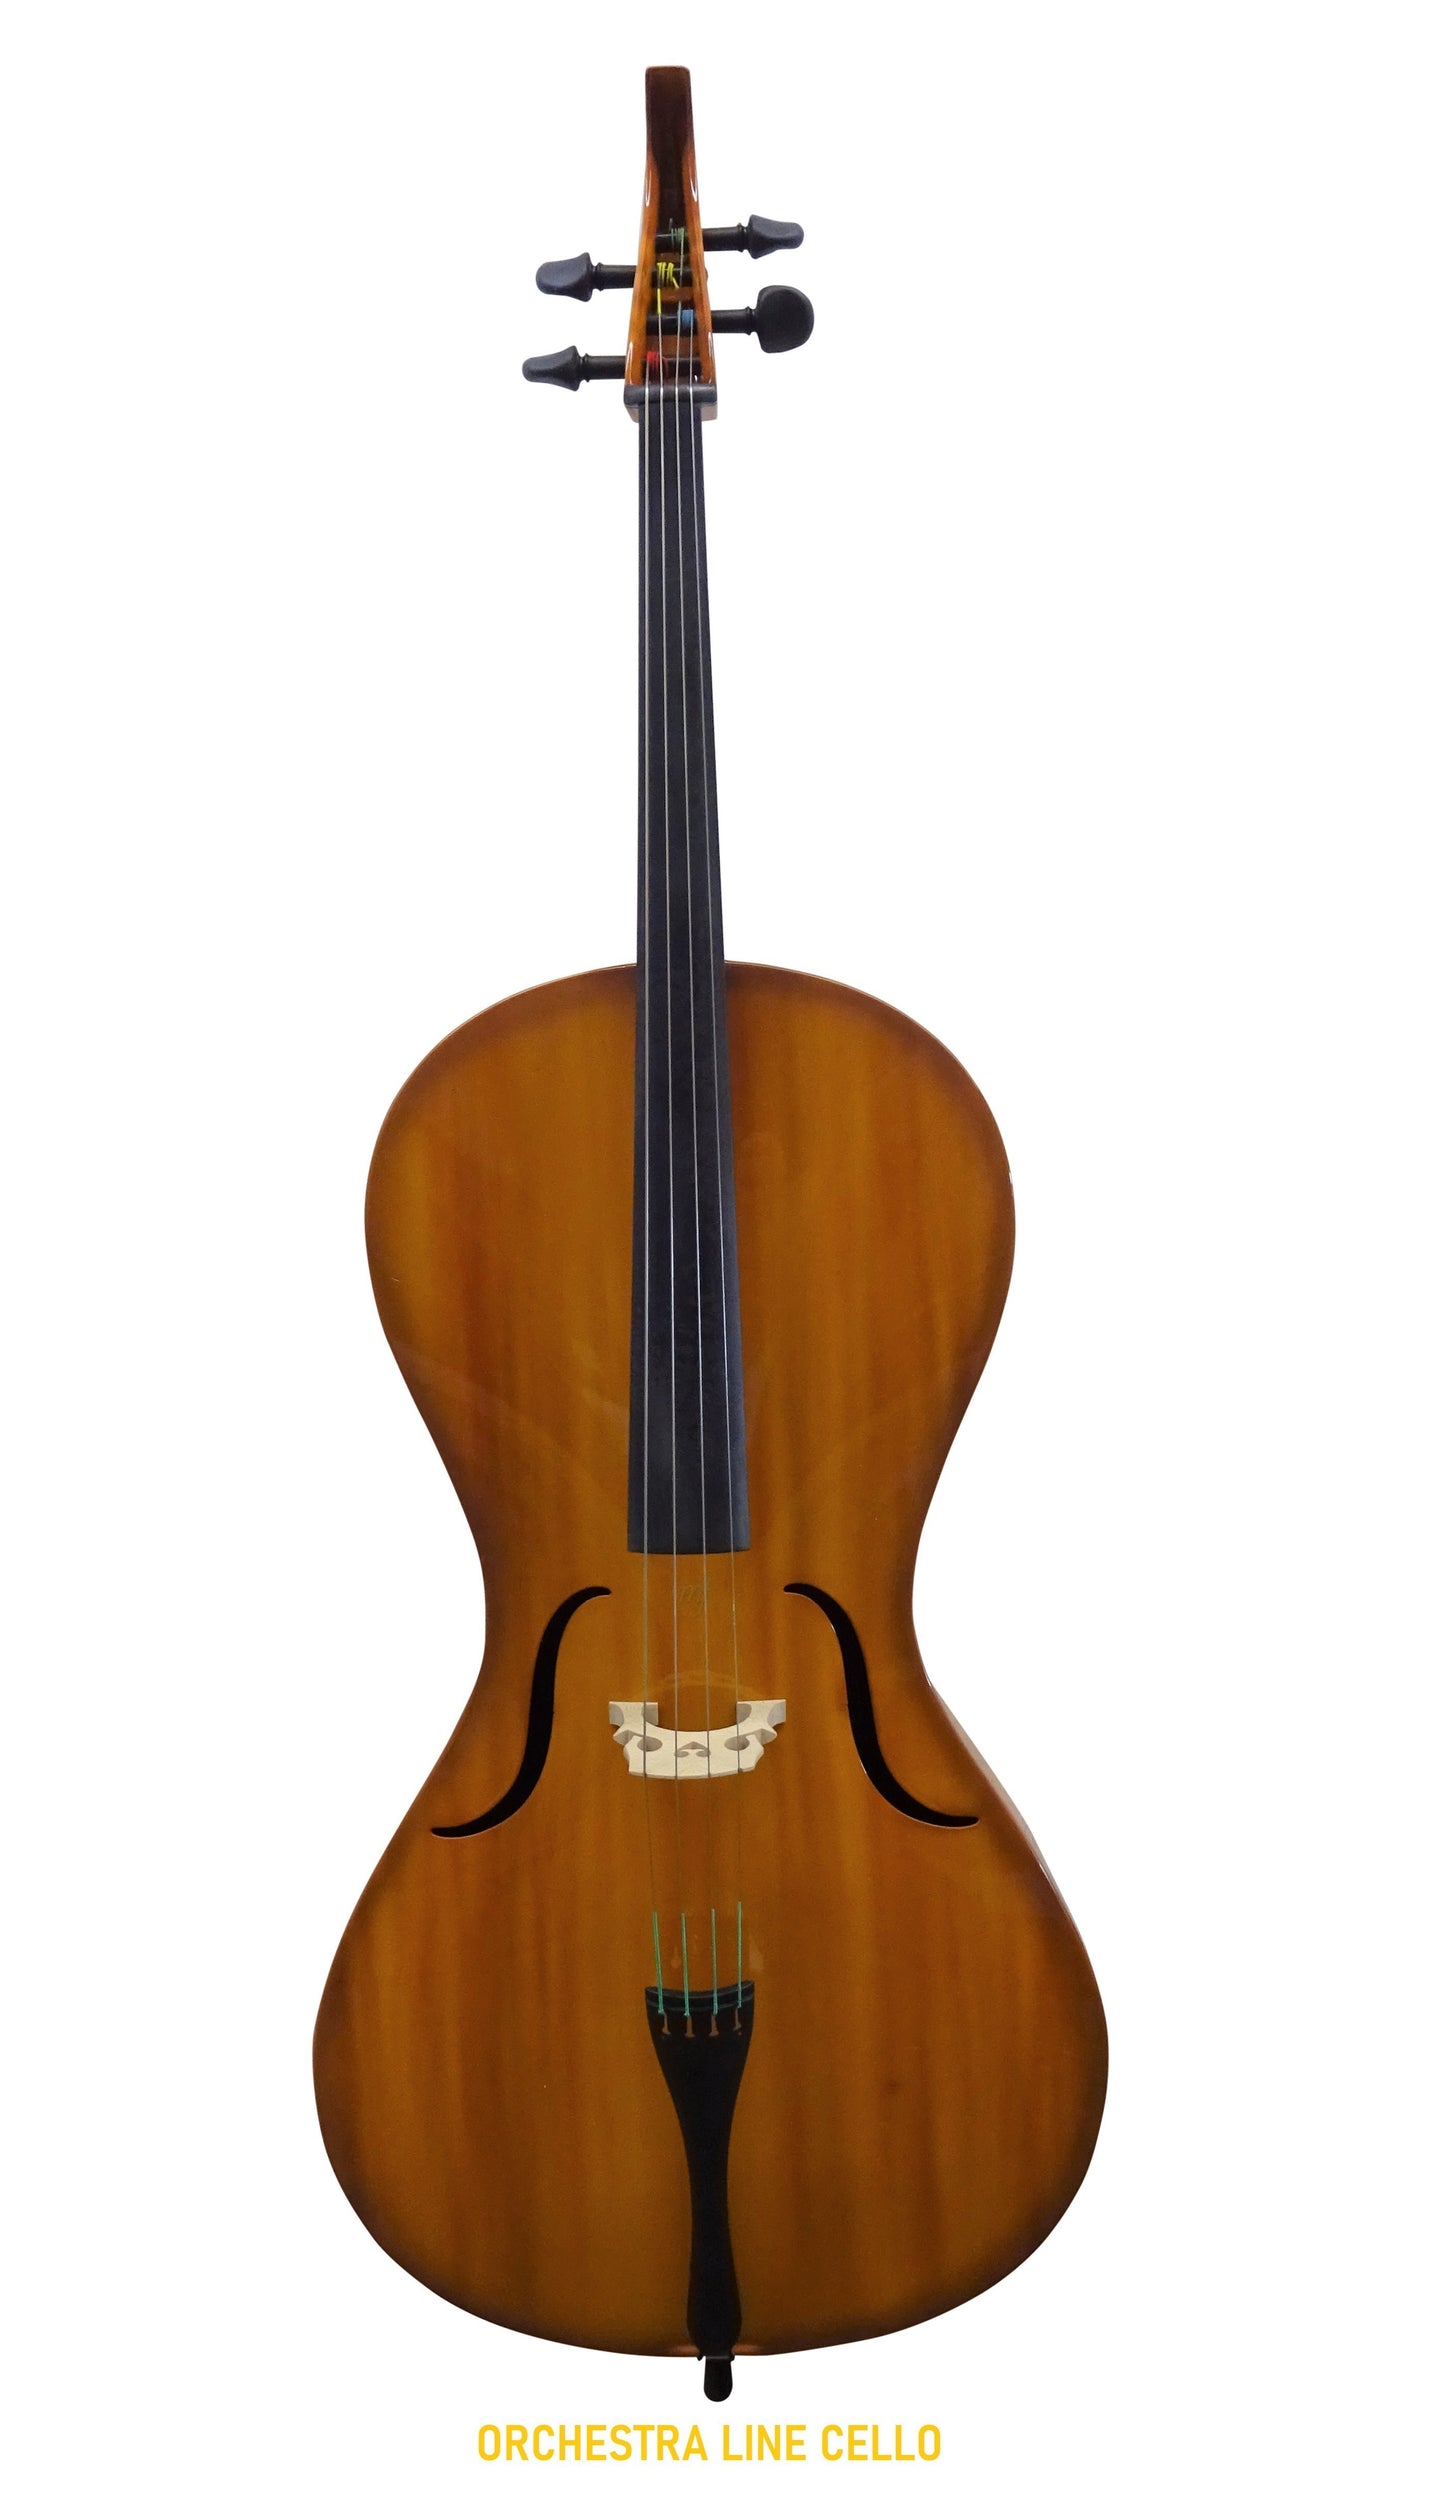 Carbon cello "Hybrid Line"